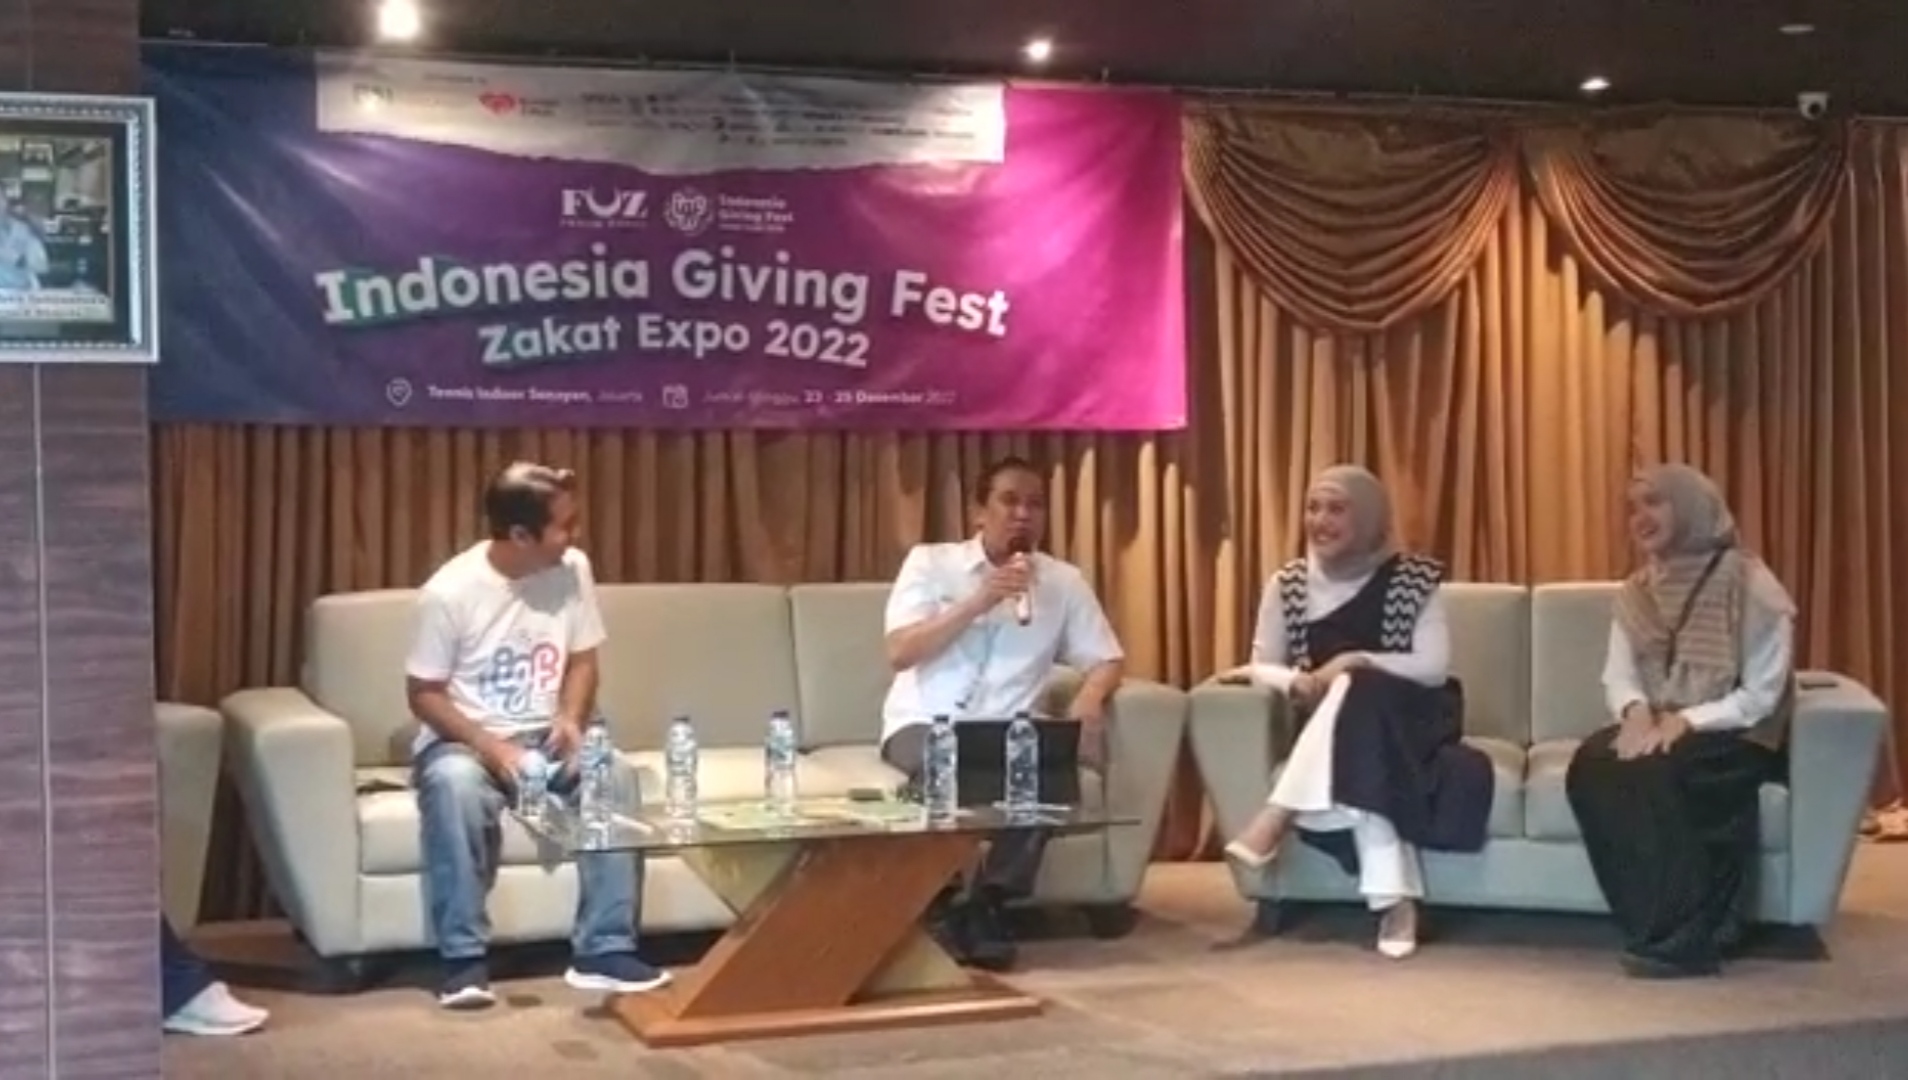 Gelar Indoneaia Giving Fest - Zakat Expo 2022, Forum Zakat Akan Ajarkan Cara Pengelolaan Dana Zakat 